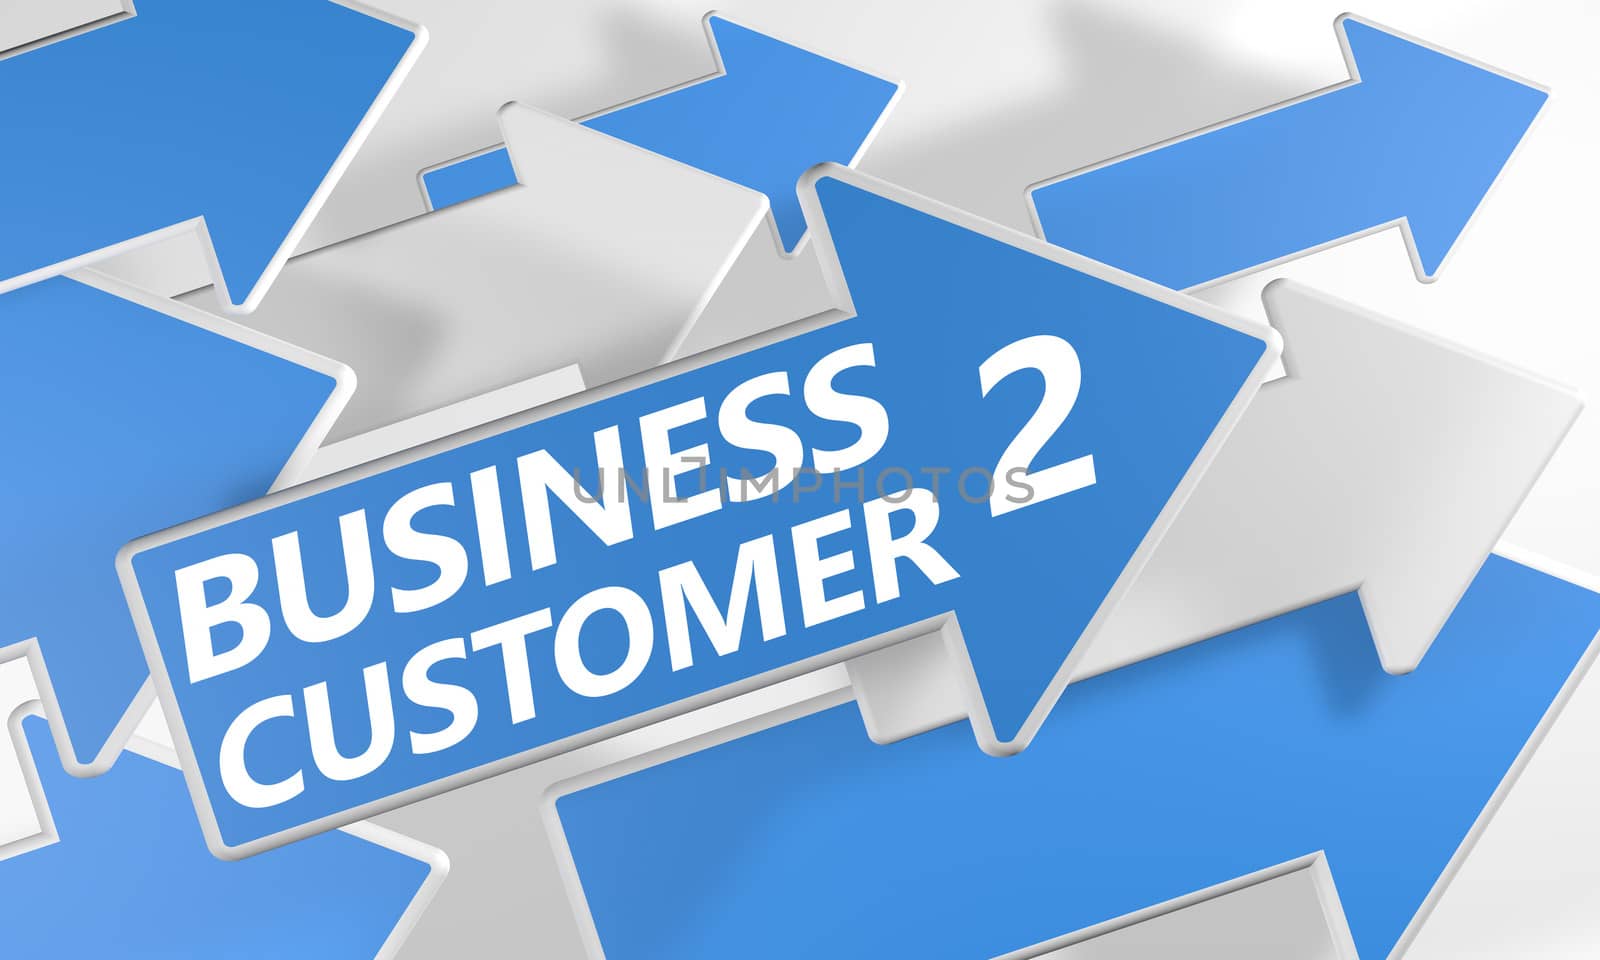 Business 2 Customer by Mazirama